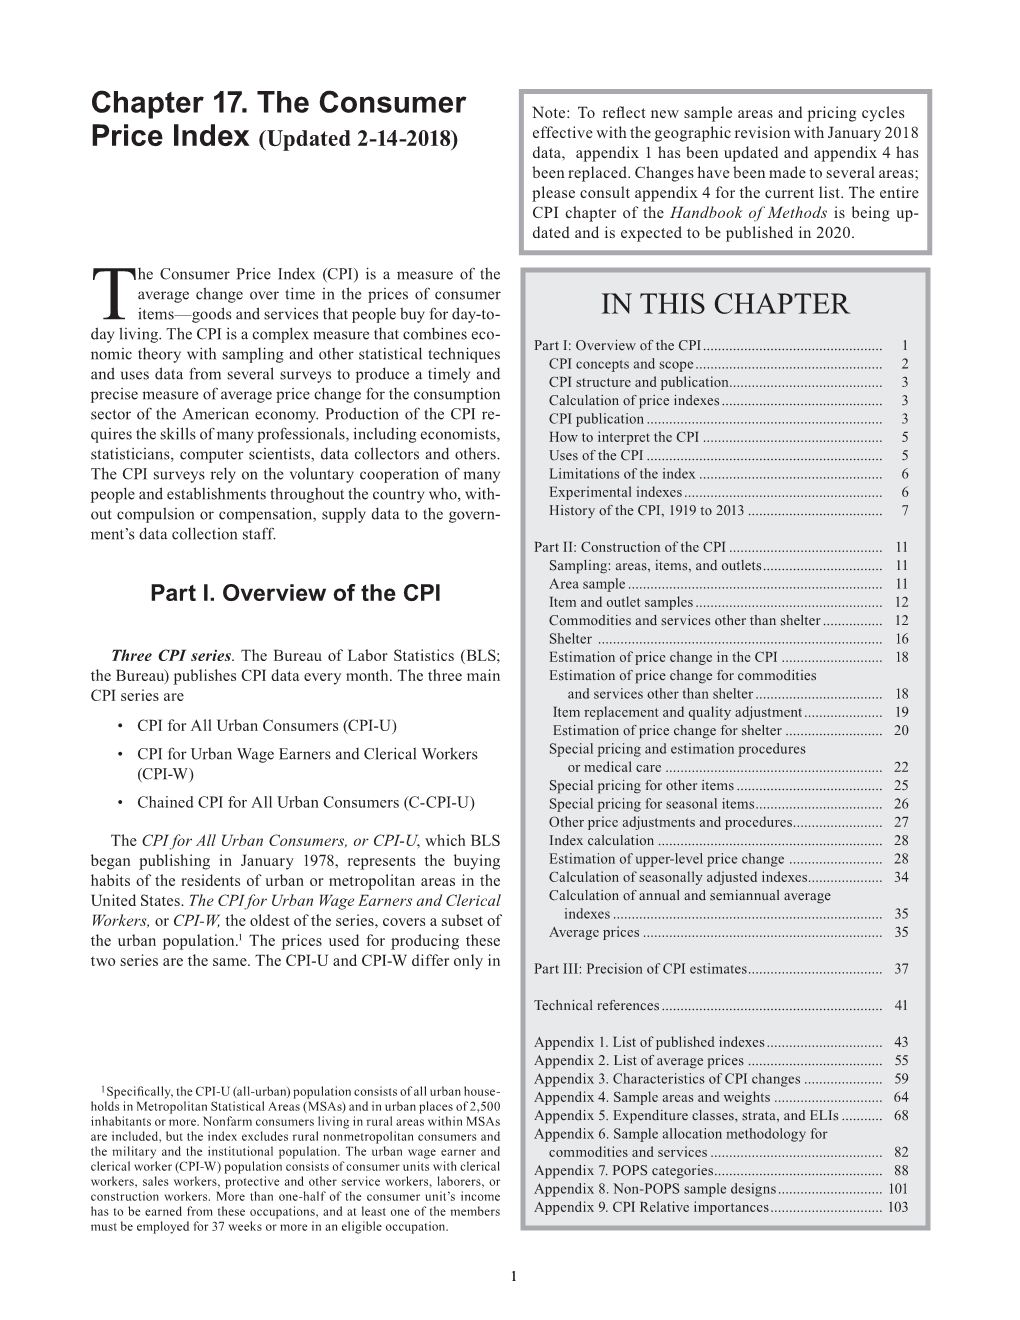 BLS Handbook of Methods, Chapter 17. the Consumer Price Index